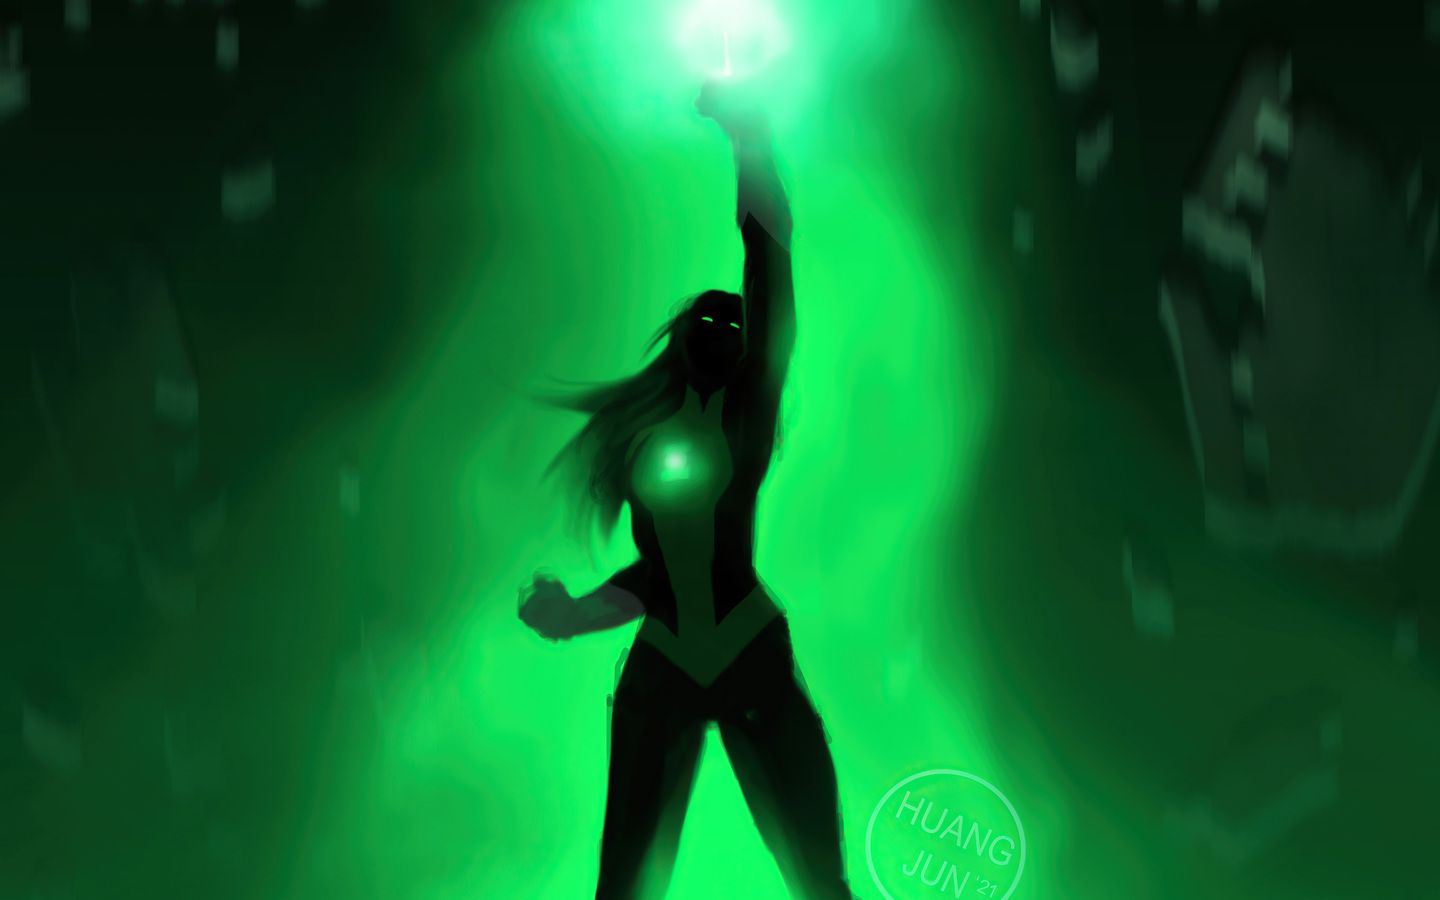 Jessica Cruz Green Lantern 5k 1440x900 Resolution HD 4k Wallpaper, Image, Background, Photo and Picture